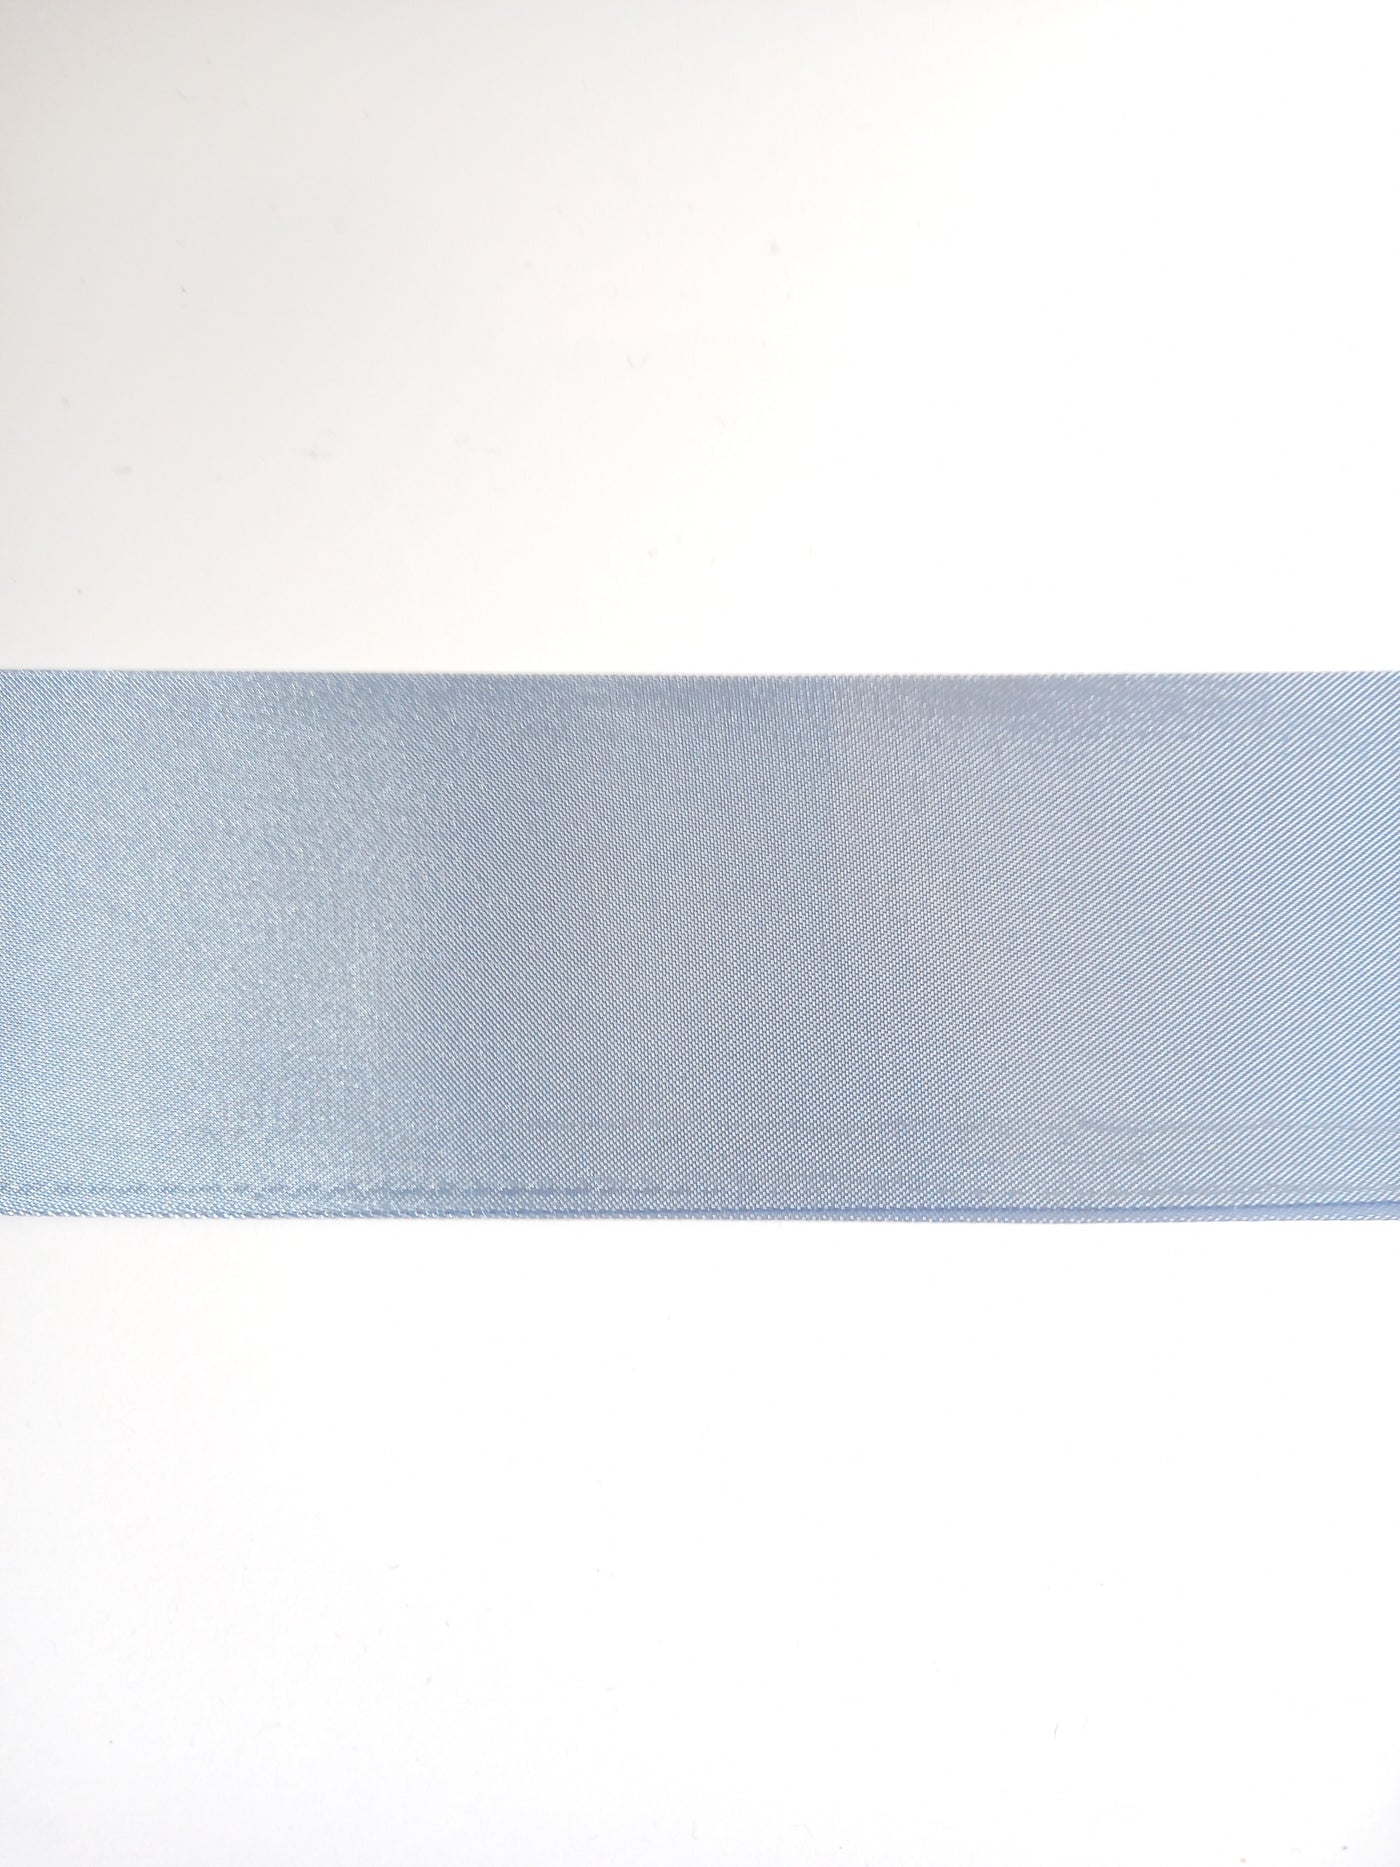 Tiffany Rose Smooth Satin Sash Belt in Powder Blue - One Size